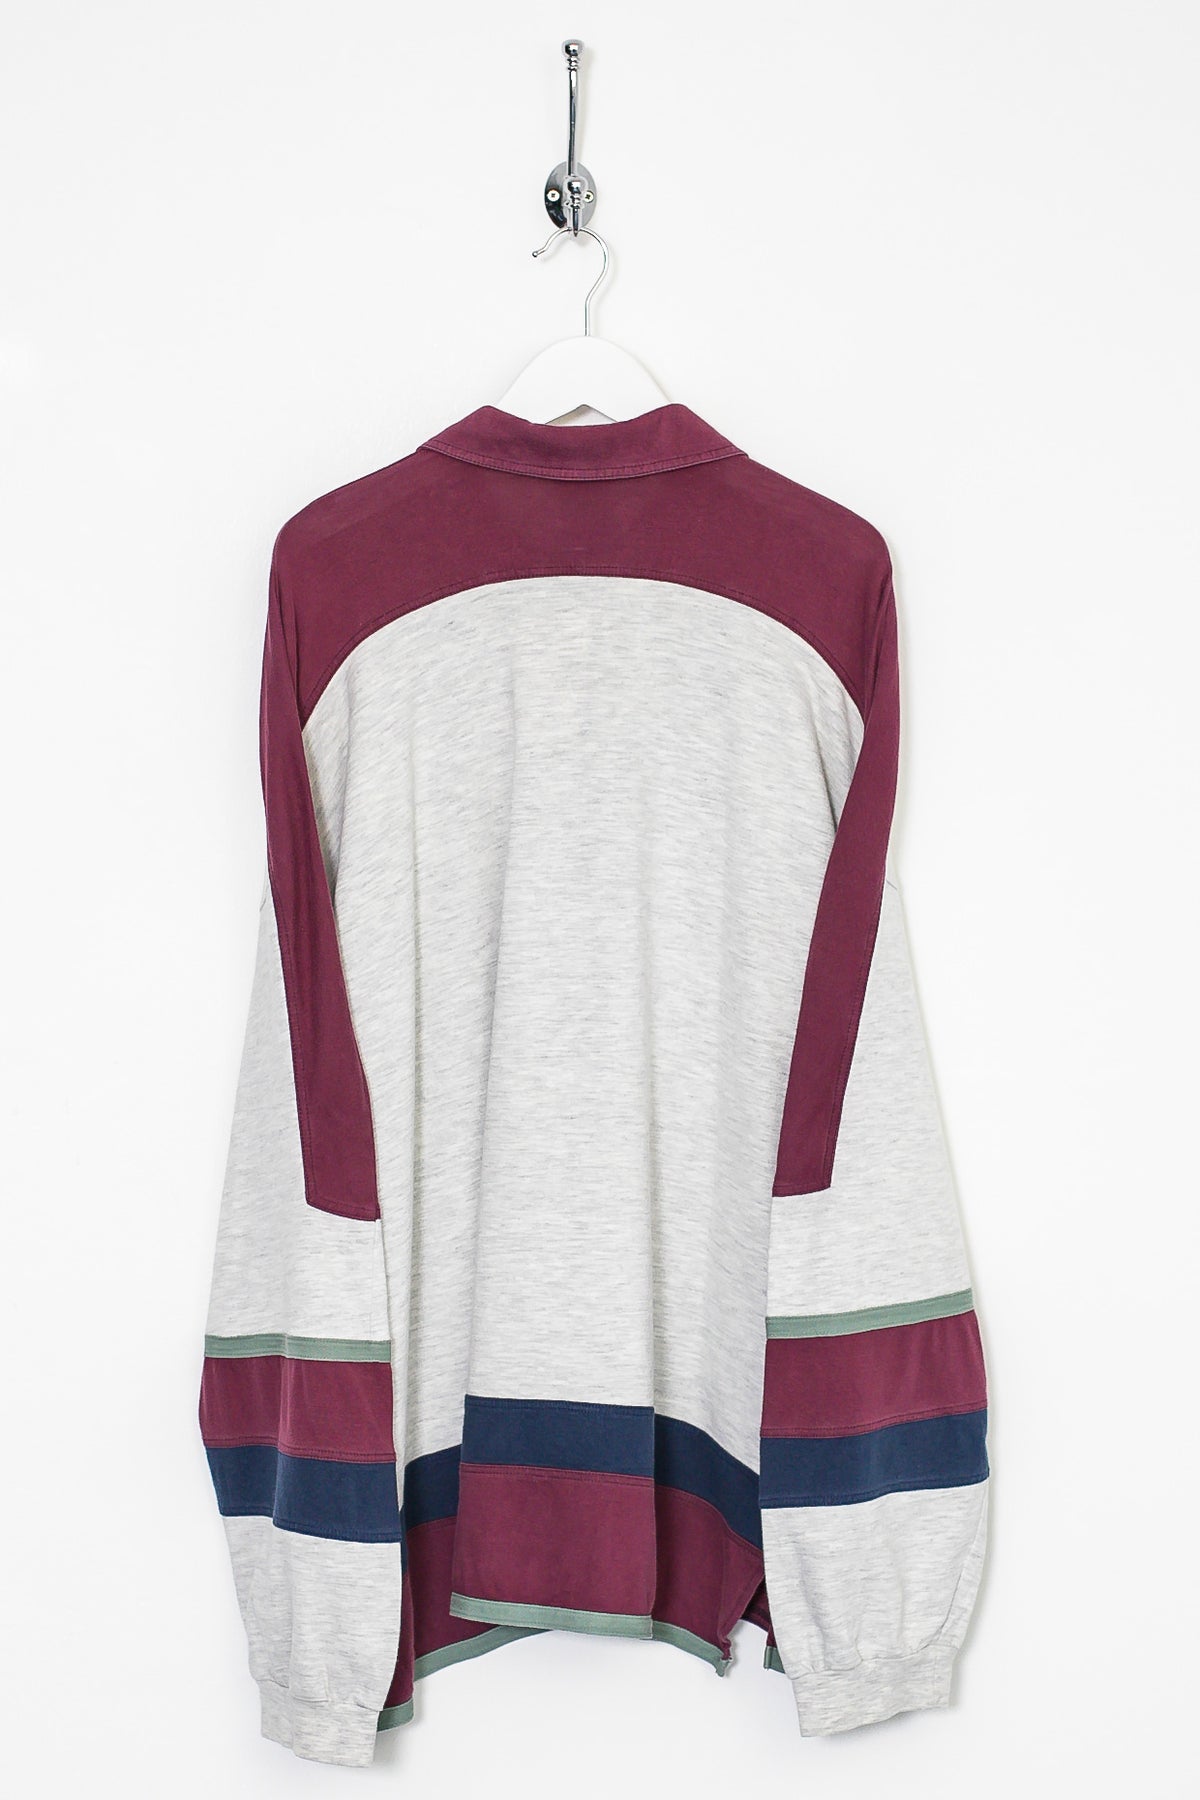 90s Puma Sweatshirt (XL)